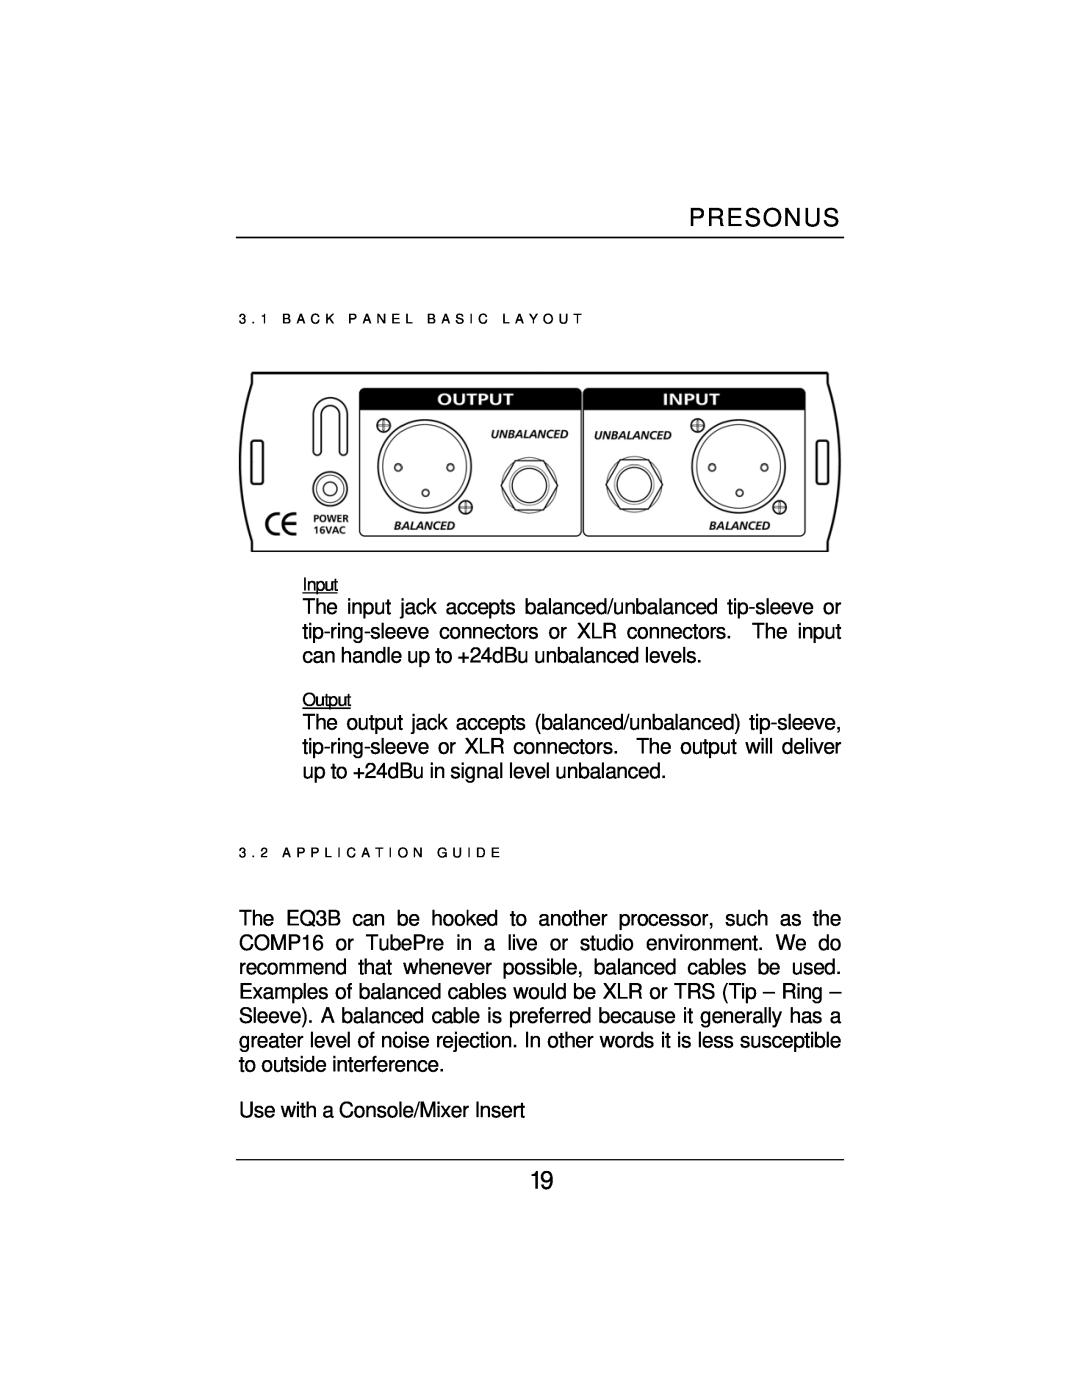 Presonus Audio electronic EQ3B, COMP16, HP4 user manual Presonus, Use with a Console/Mixer Insert 